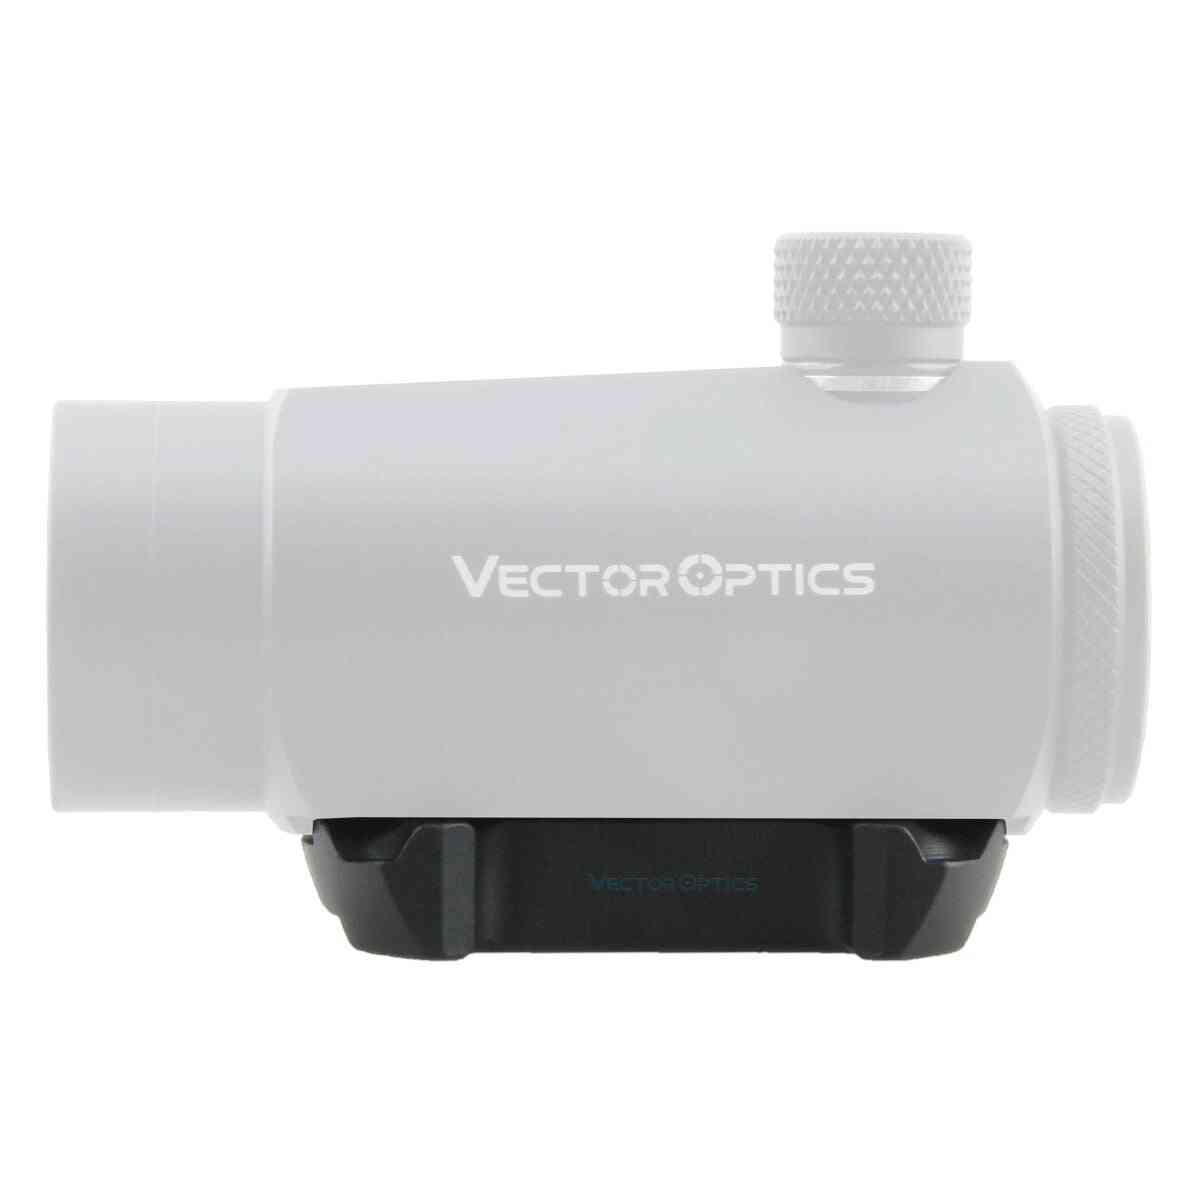 Vector Optics Extreme Low Profile Dovetail Mount